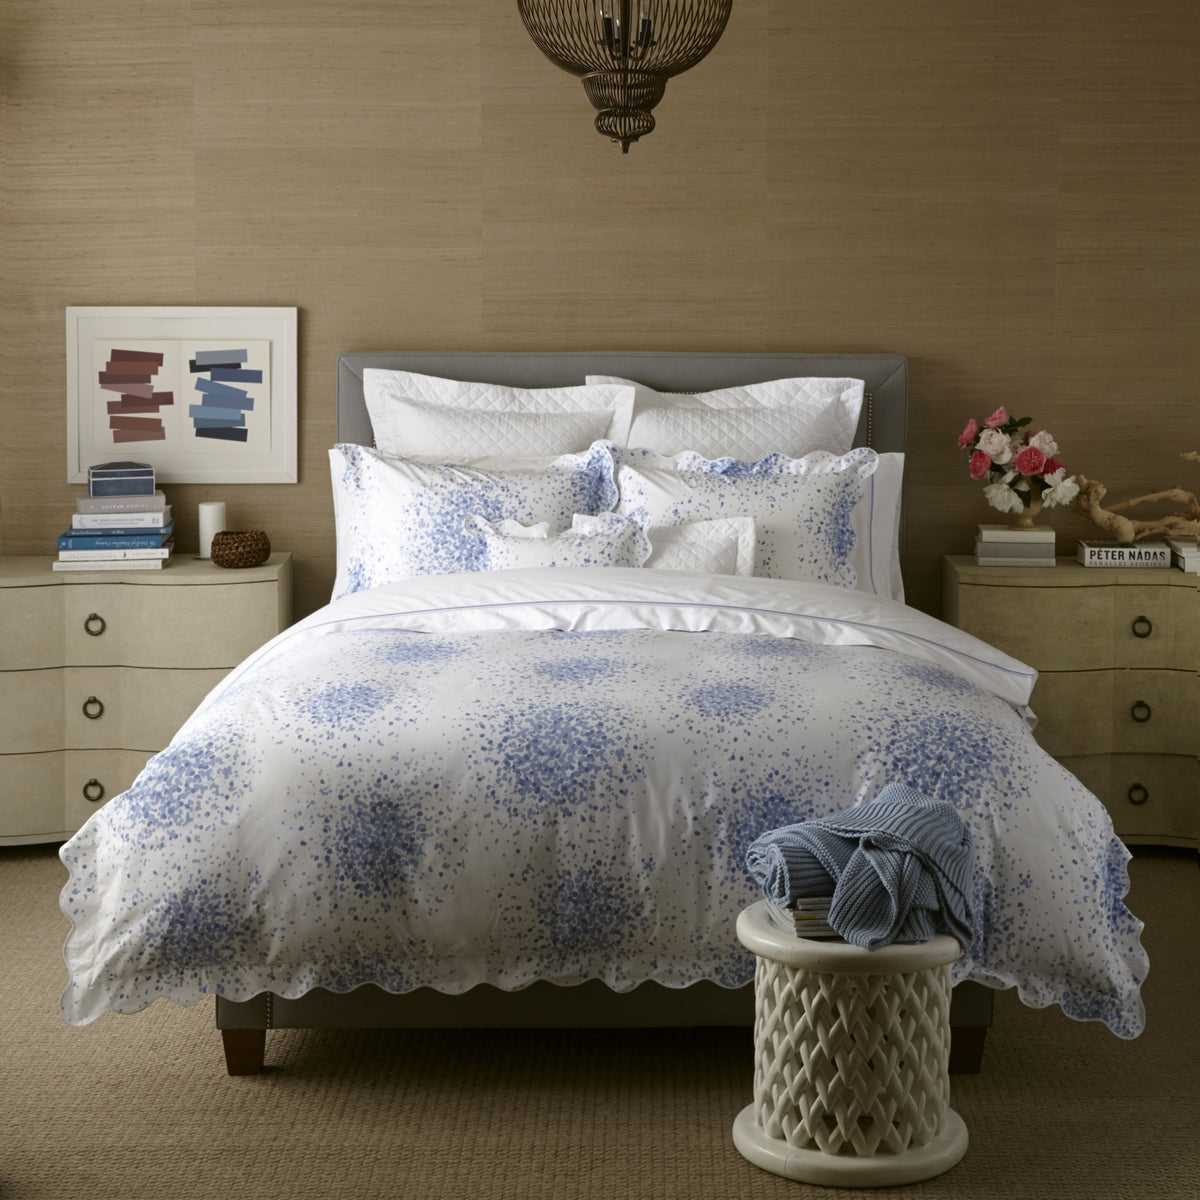 Full Bed Dressed in Matouk Poppy Bedding in Azure Color